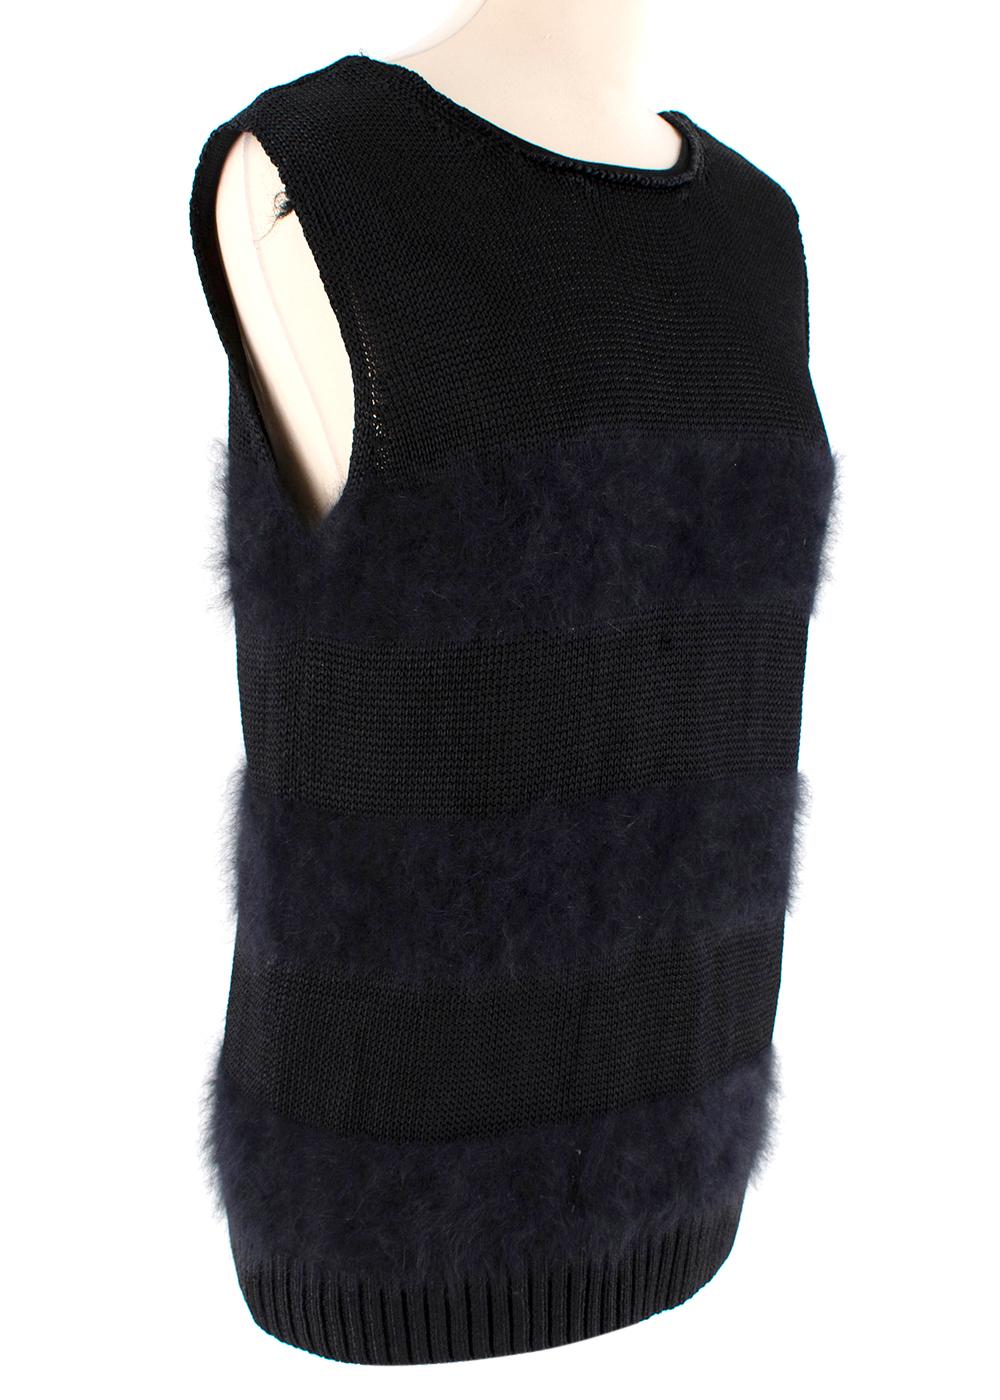 Balenciaga Black Angora Blend Knit Vest 

- Made of soft angora blend 
- Striped textured effect 
- Classic cut 
- V shaped neckline 
- Neutral black hue 
- Timeless versatile design 

Materials:
64% rayon, 25% angora, 9% polyamide, 2% lycra

Dry